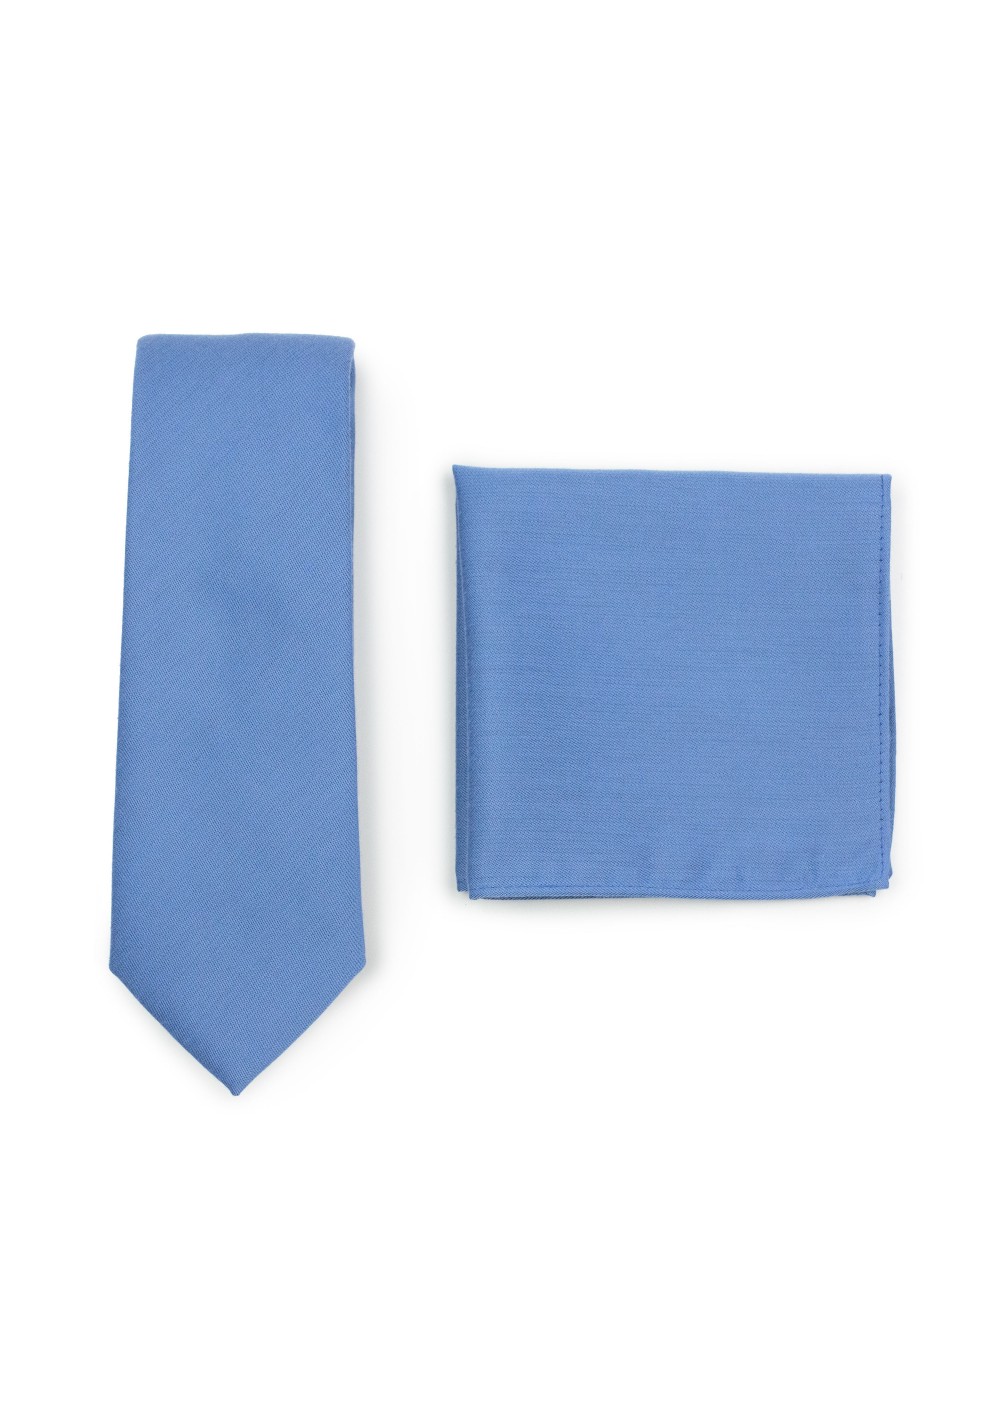 Ash Blue Tie and Hanky Set